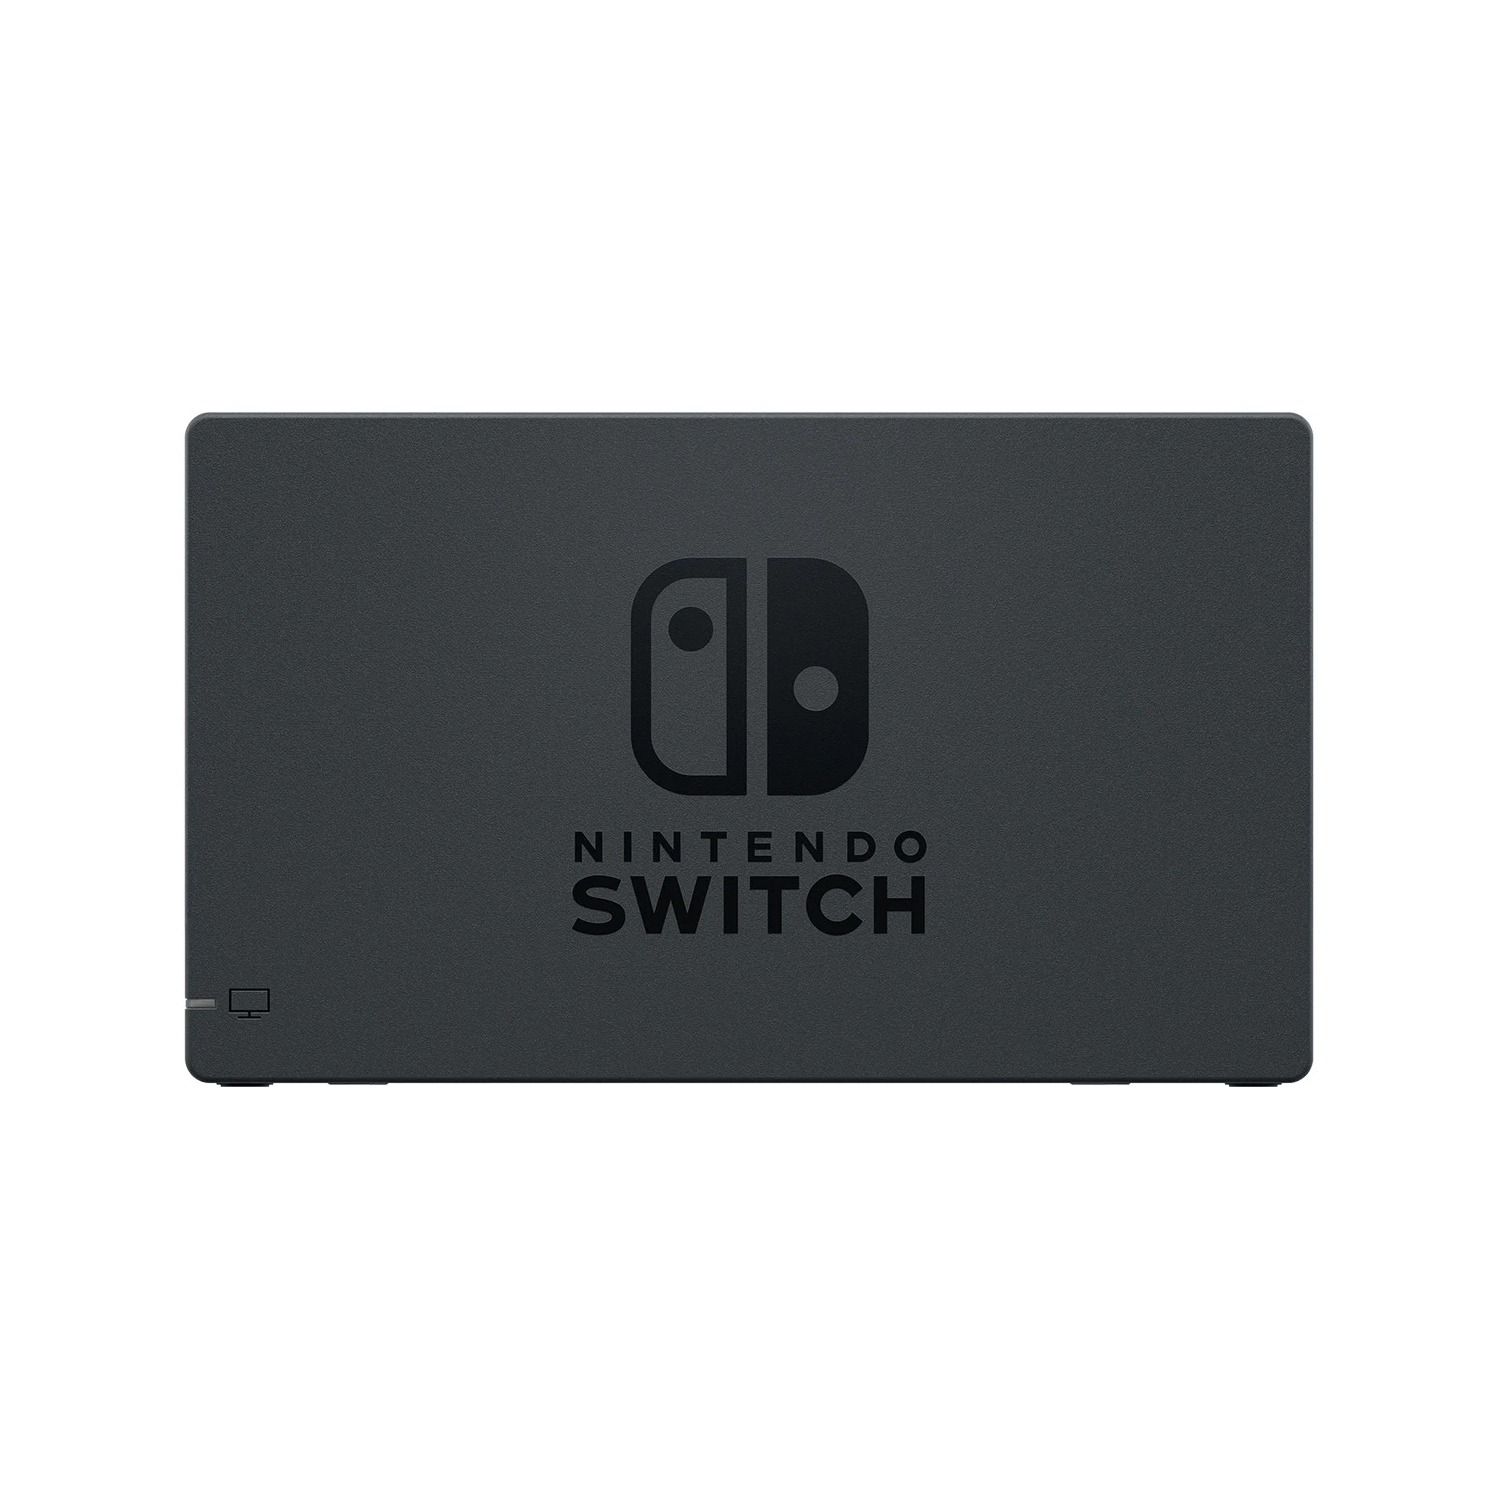 Refurbished (Good) Nintendo Switch Original Dock